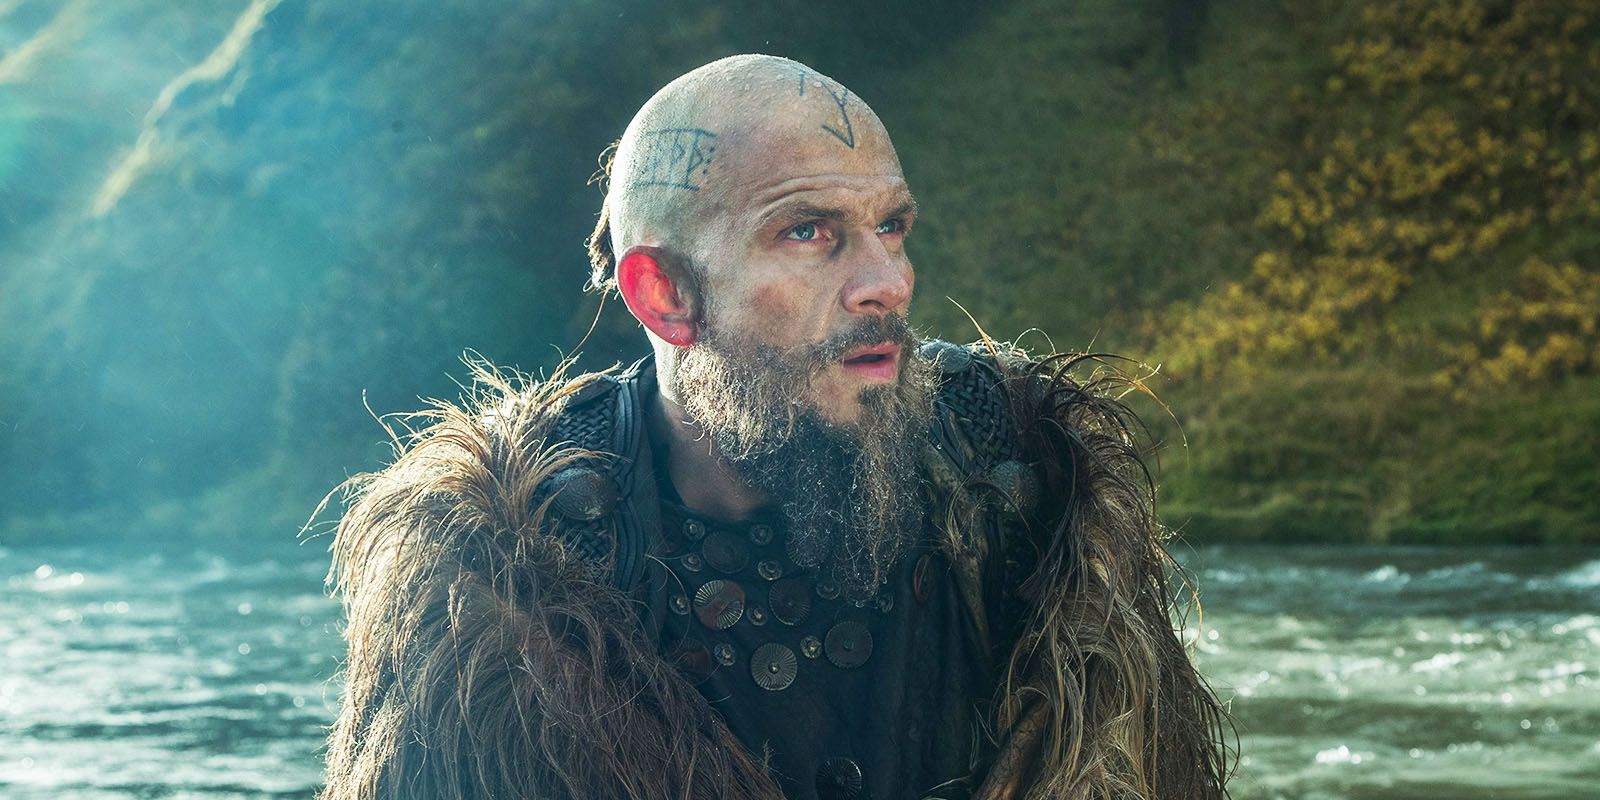 Floki in season 5's Vikings, standing in fur coat next to river.